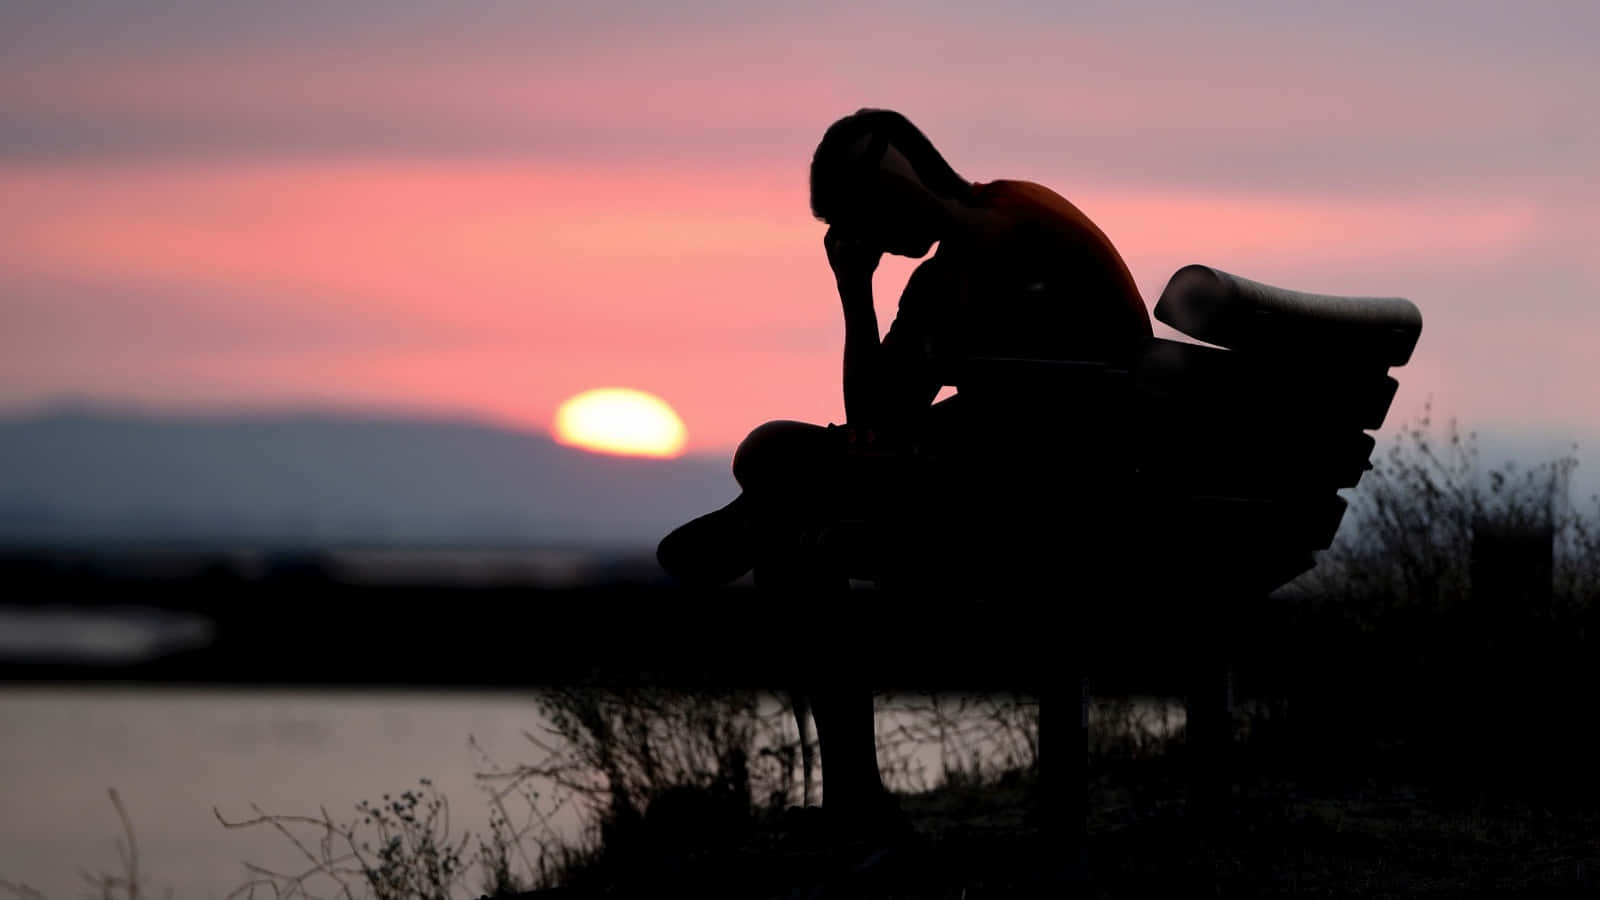 Alone Sad Depressed Man Silhouette Picture